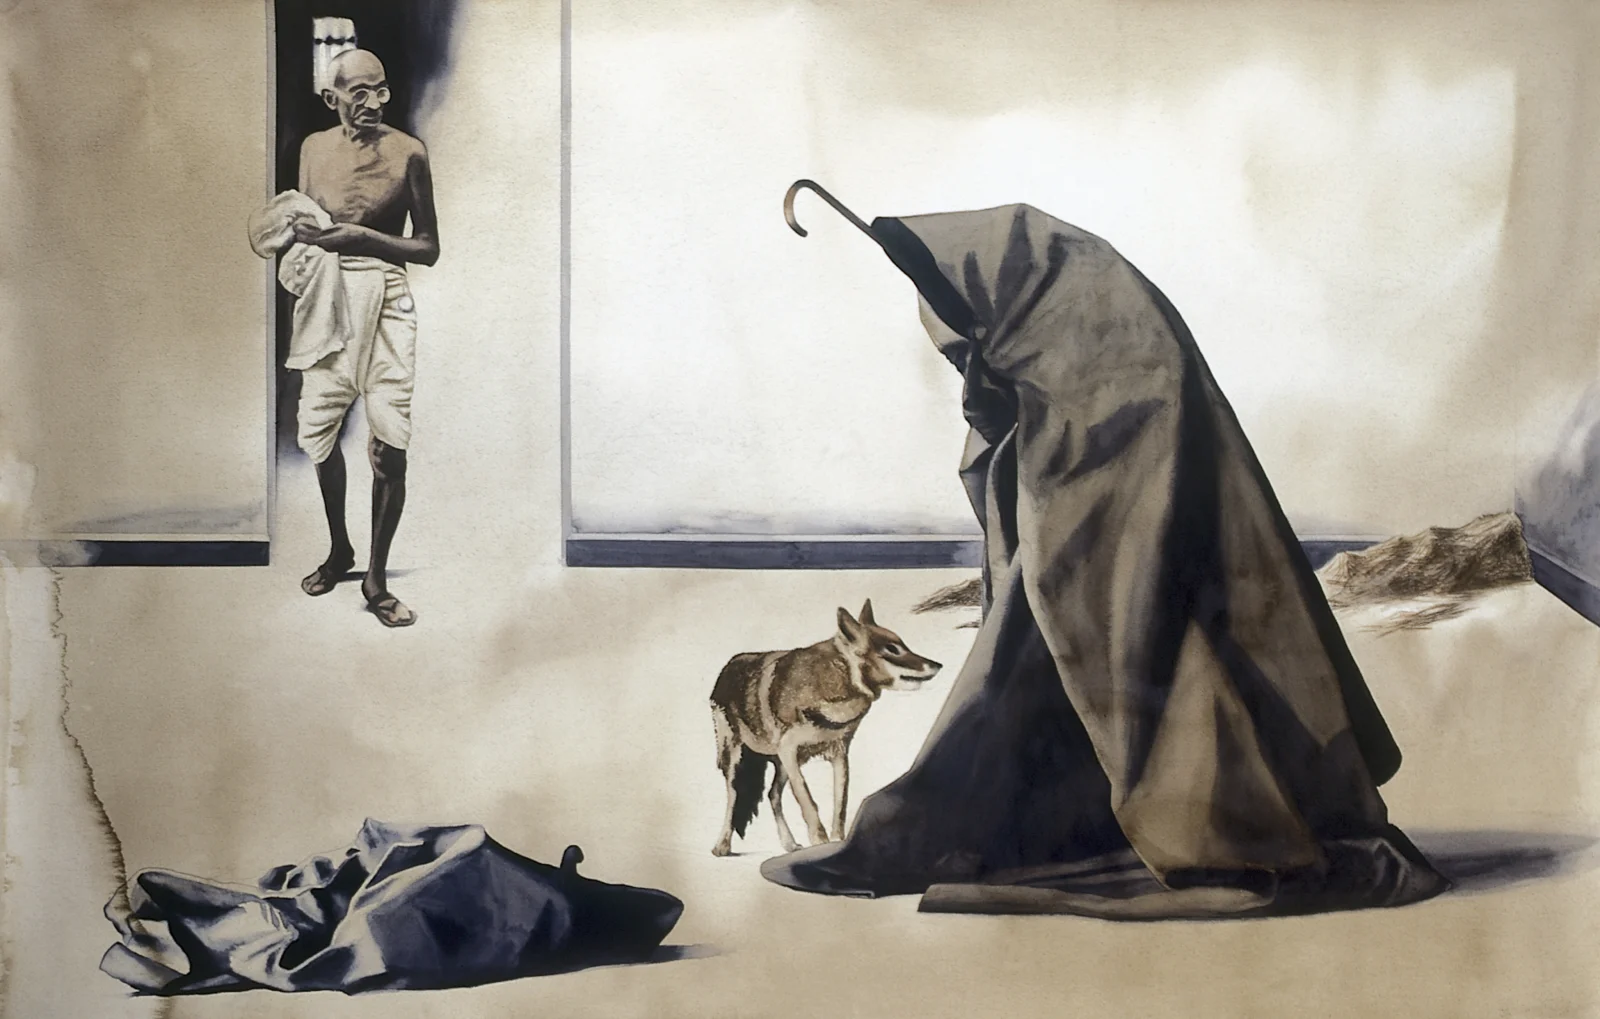 About the Artwork Atul Dodiya. Bapu at Rene Block Gallery, New York 1974, 1998  by Atul Dodiya